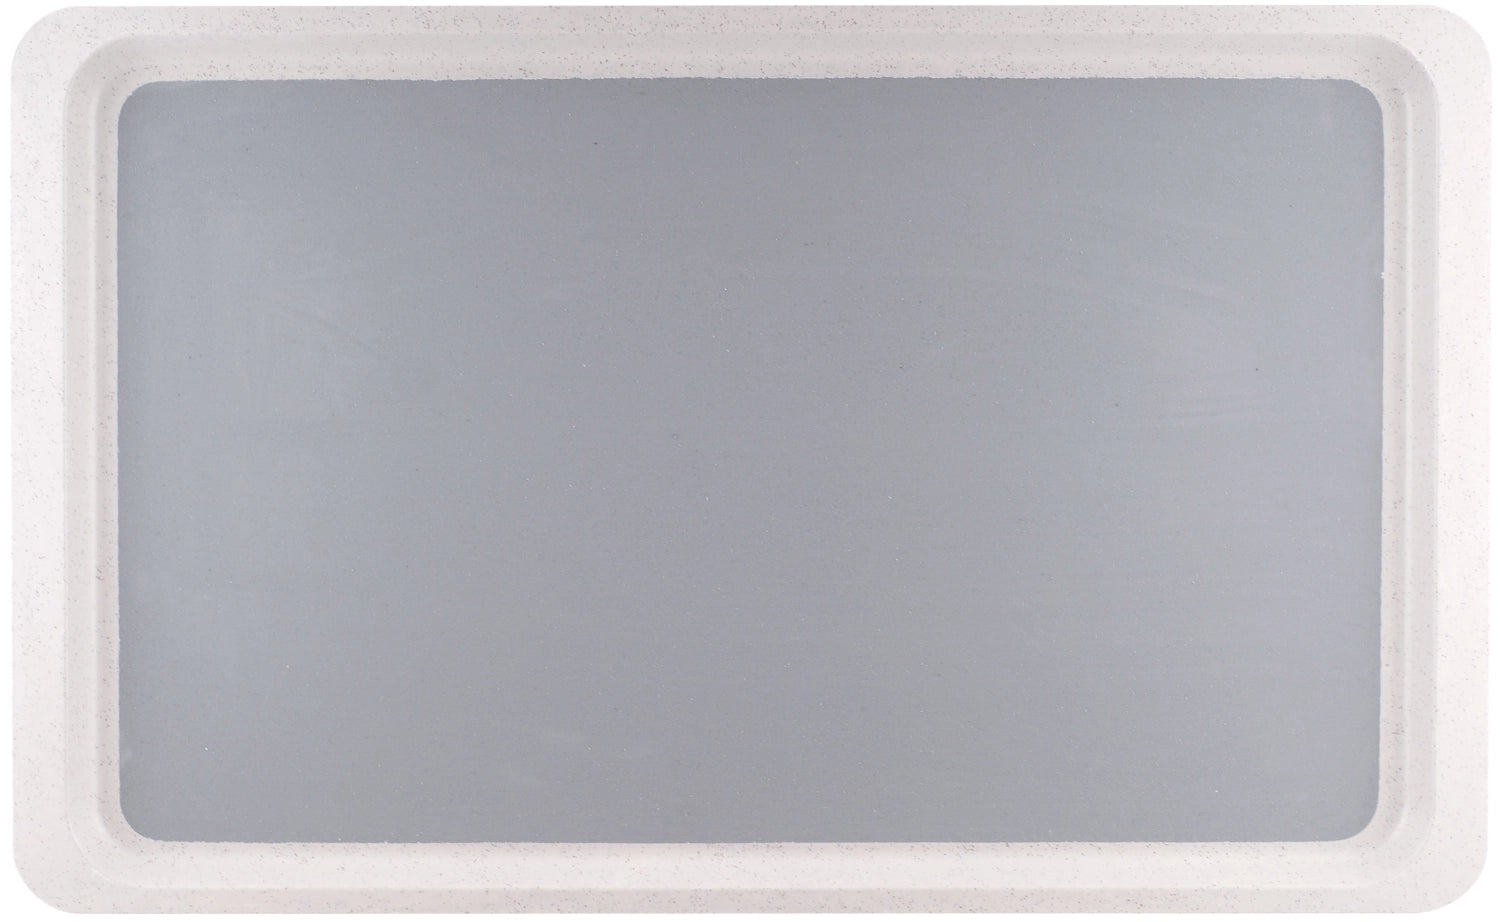 Tablett GN1/1 Poly Classic Rutschfest, grau 53x32.5cm - KAQTU Design